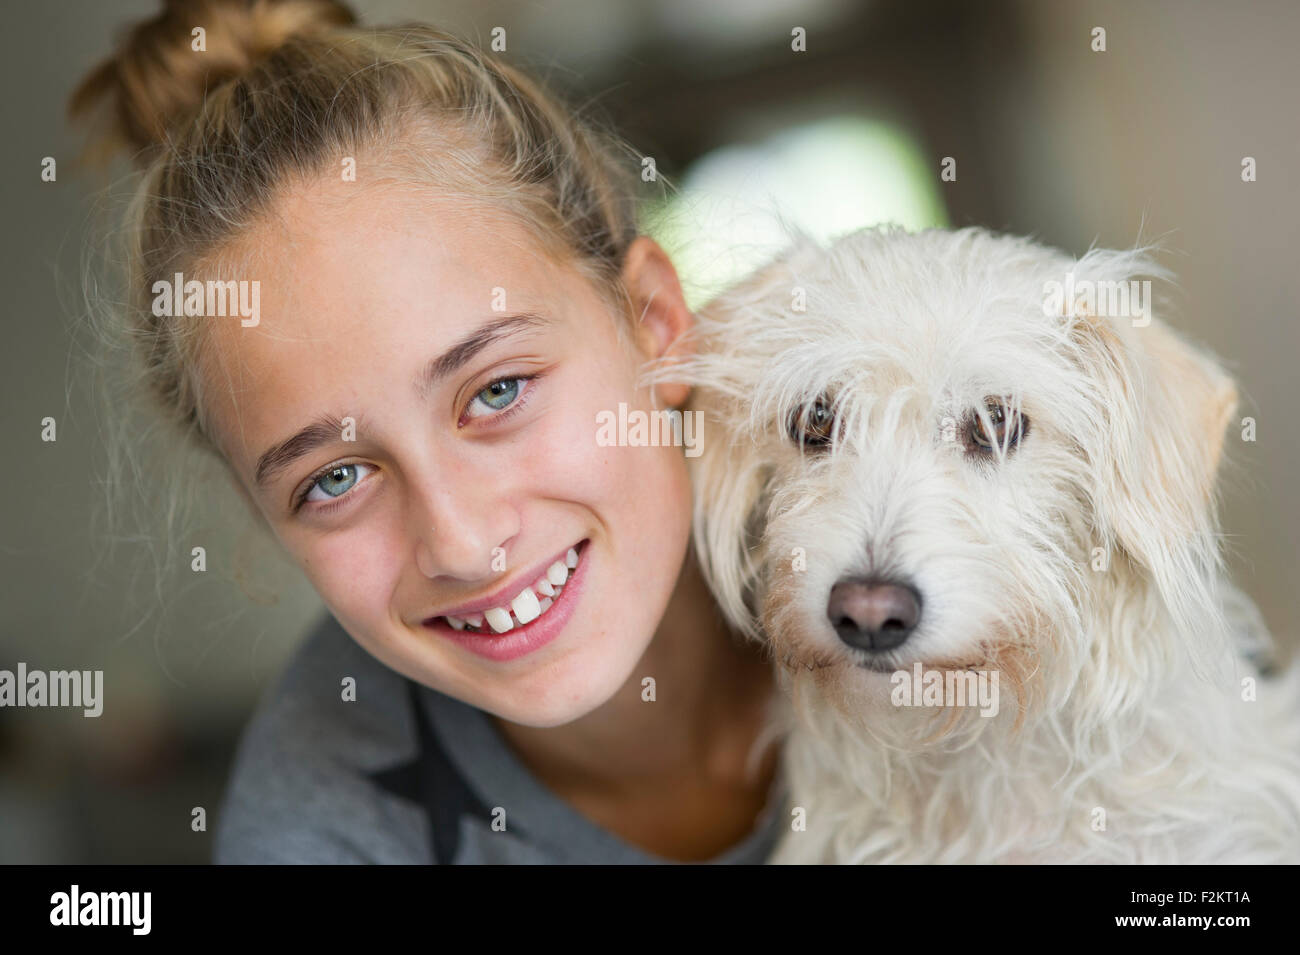 Girls with dog Stock Photo